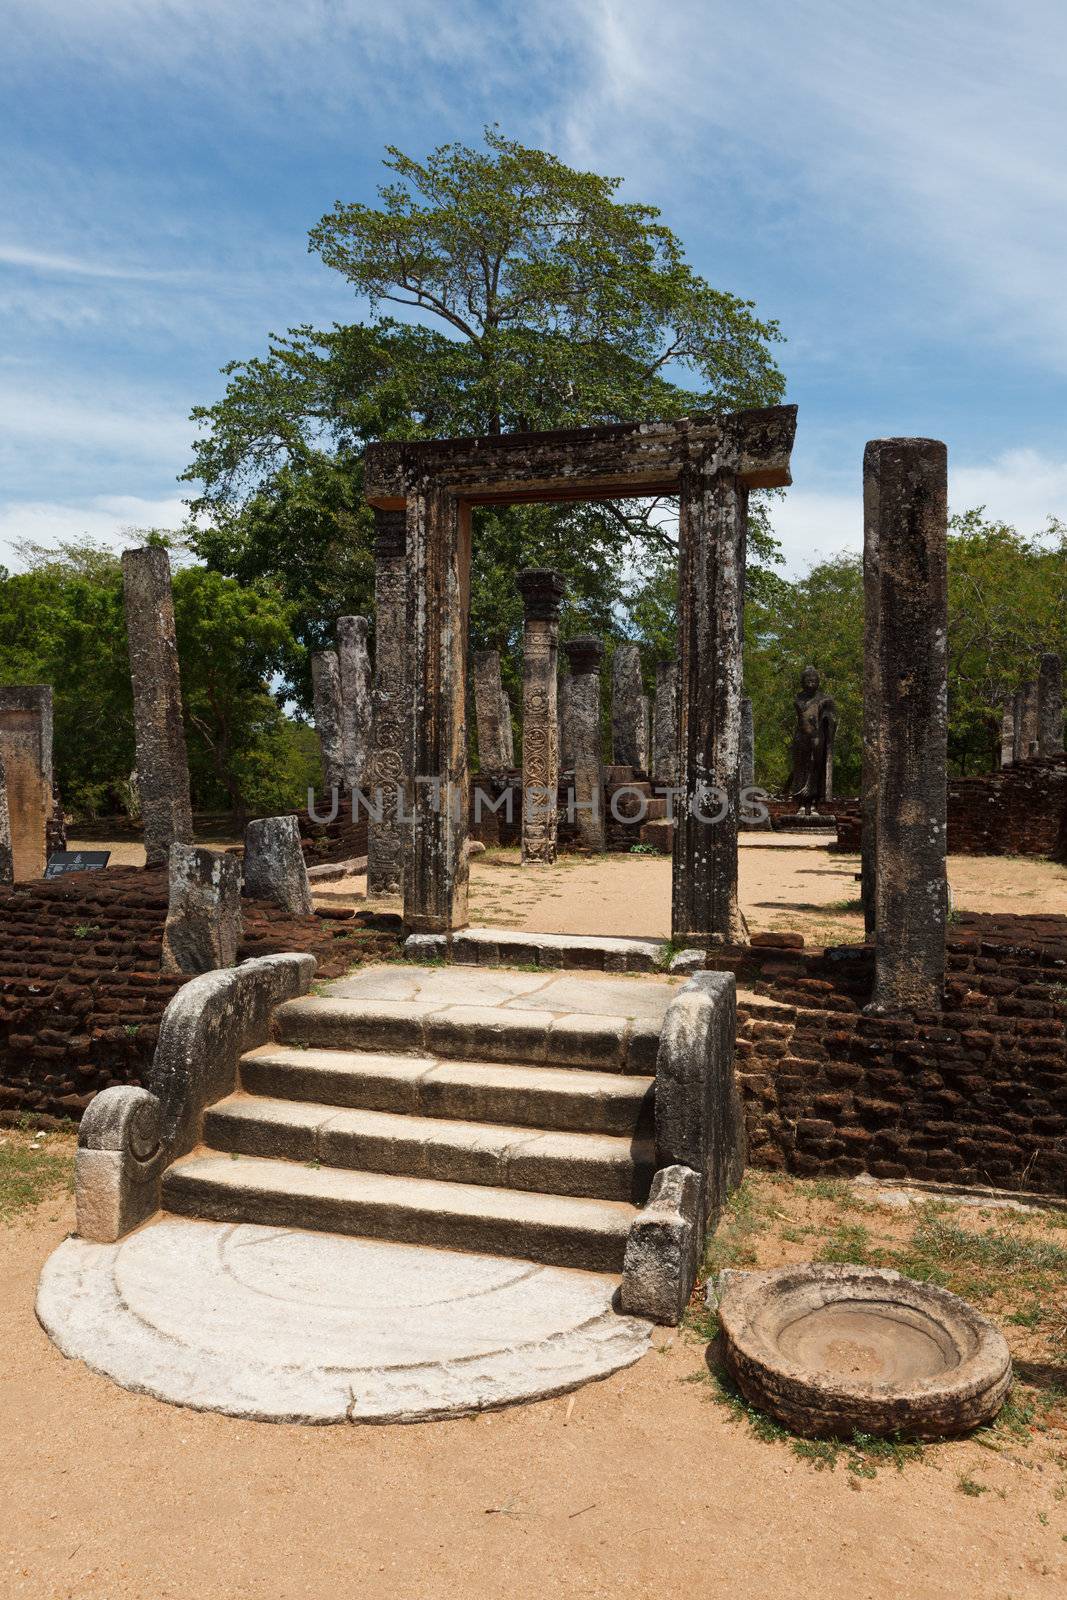 Ruins. Ancient city of Polonnaruwa. Sri Lanka by dimol